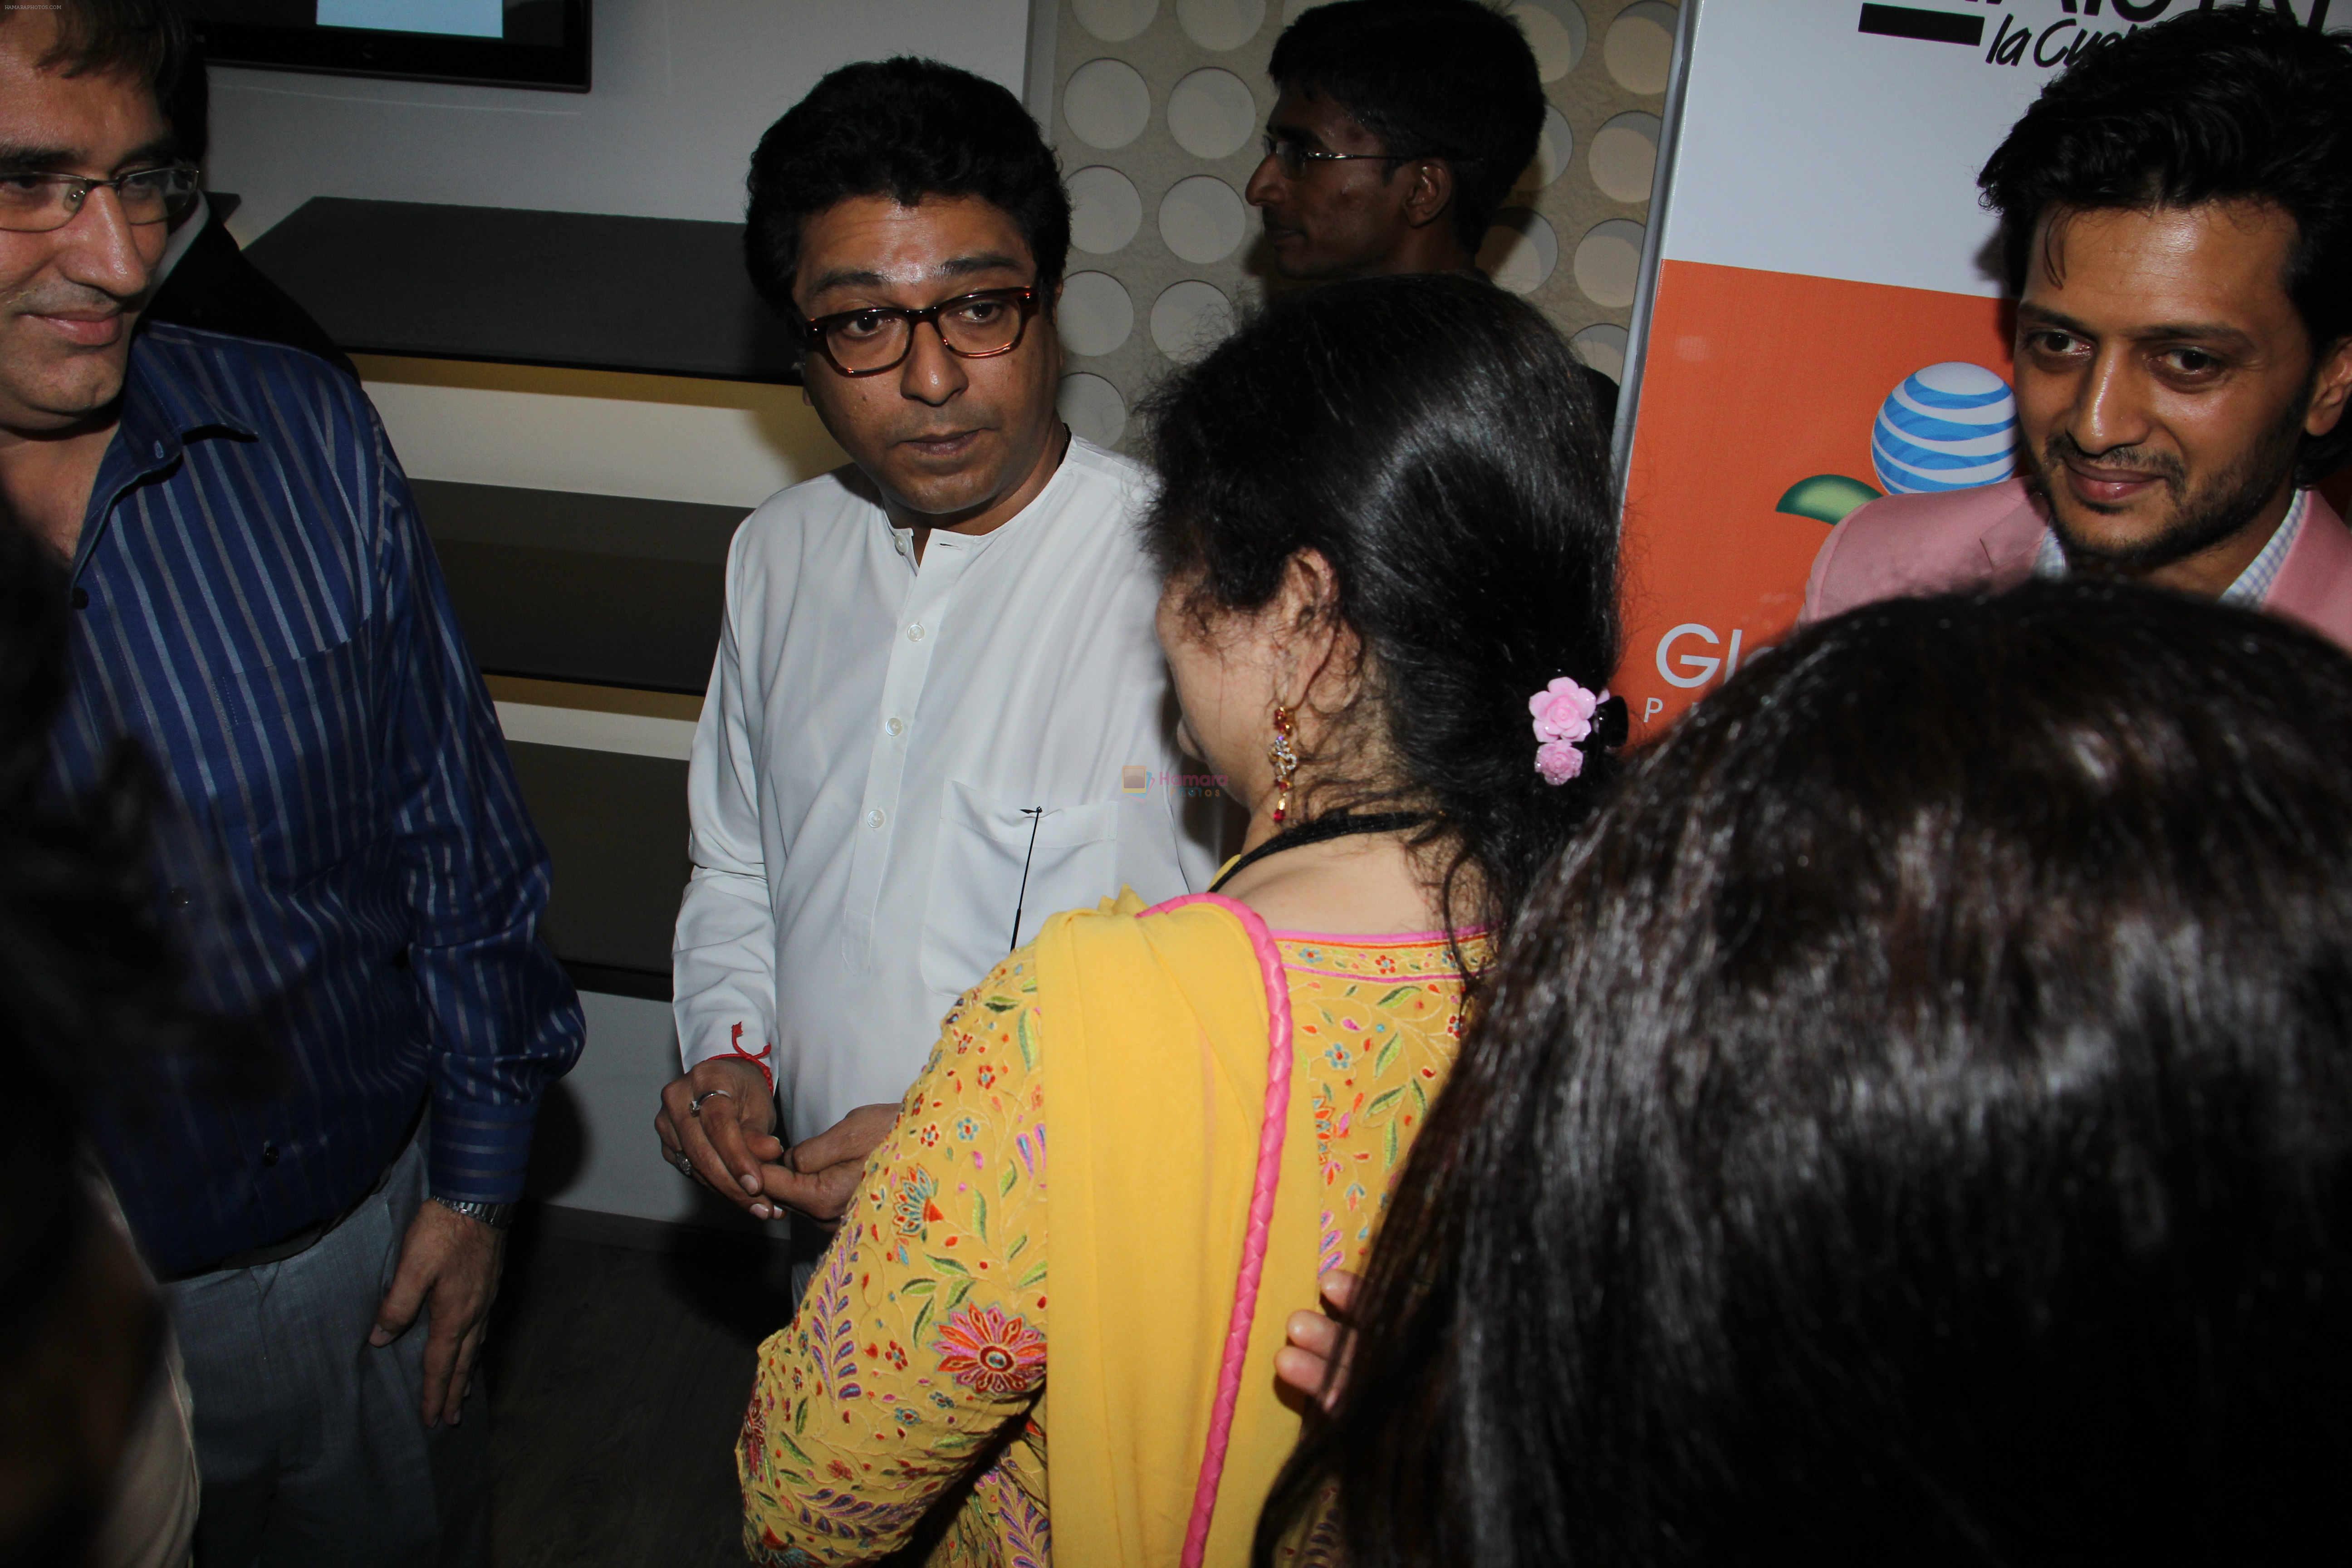 Globus ProCon studio launched by Honble Mr. Raj Thackeray& Mr. Riteish Deshmukh in Mumbai on 30th April 2015